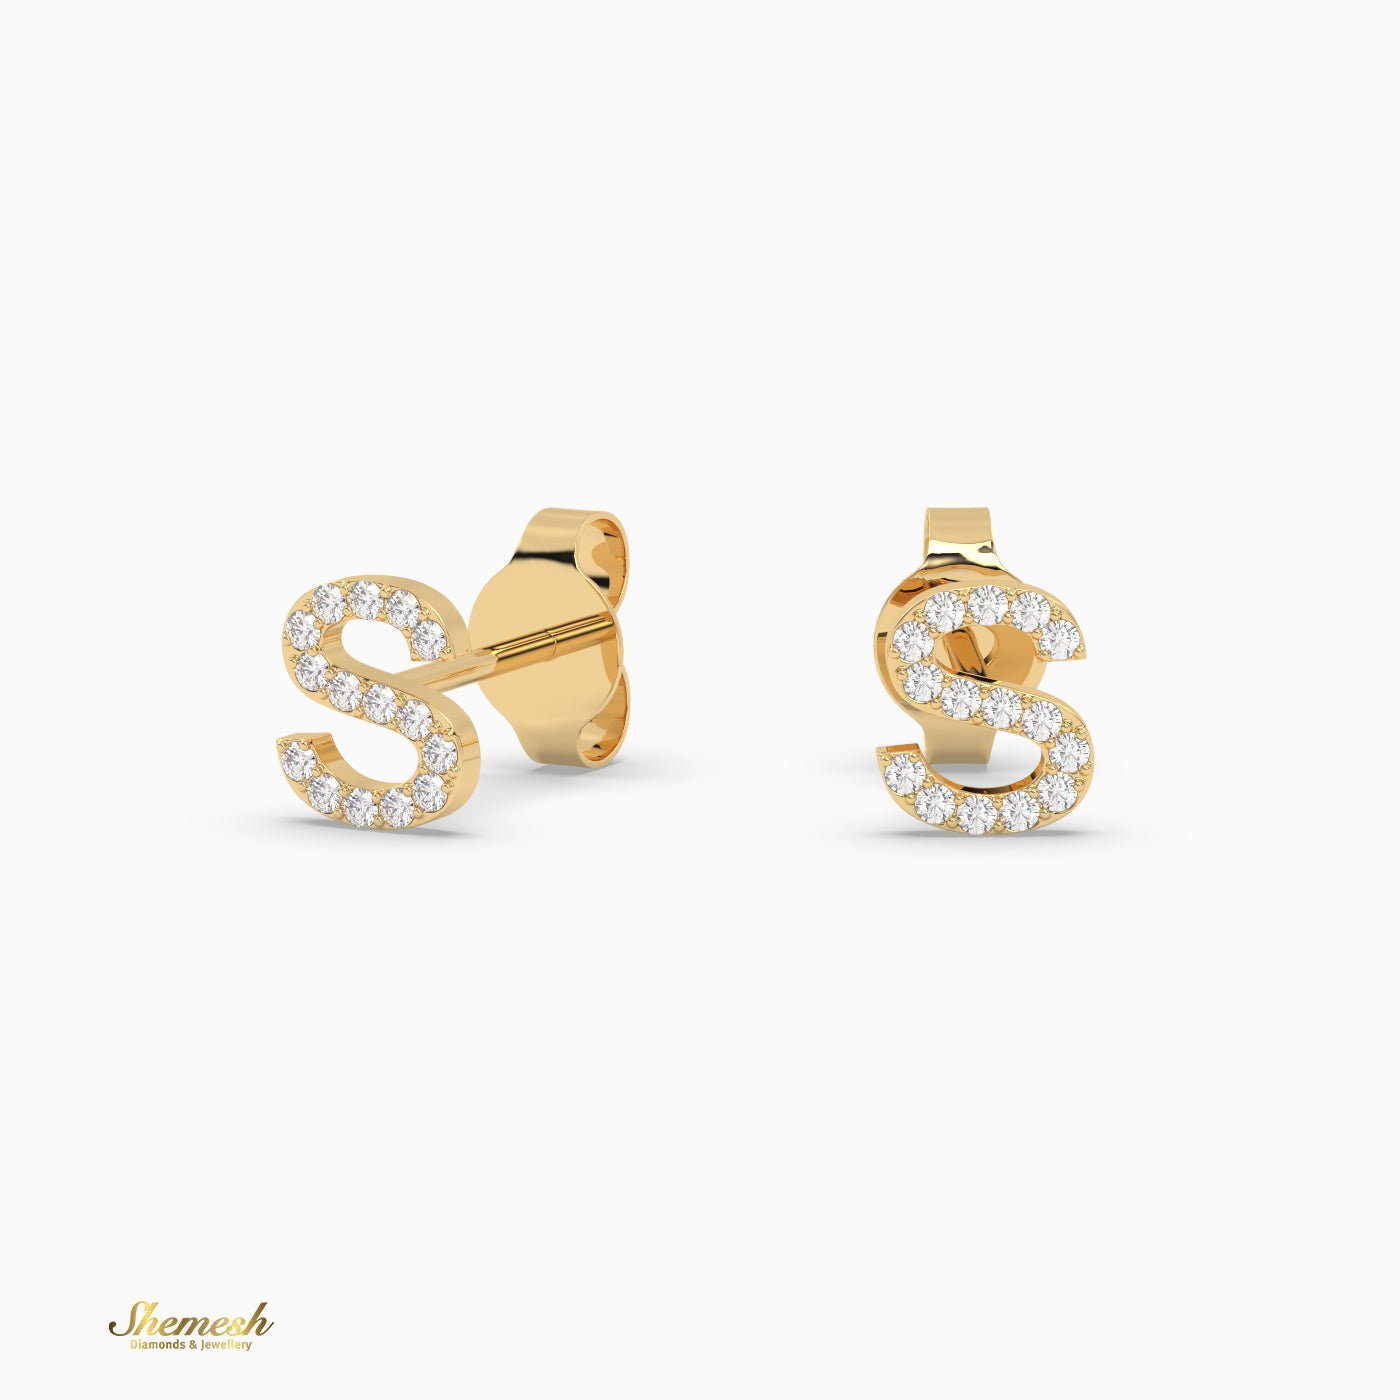 18K Gold "S" Initial Stud Earrings - shemesh_diamonds